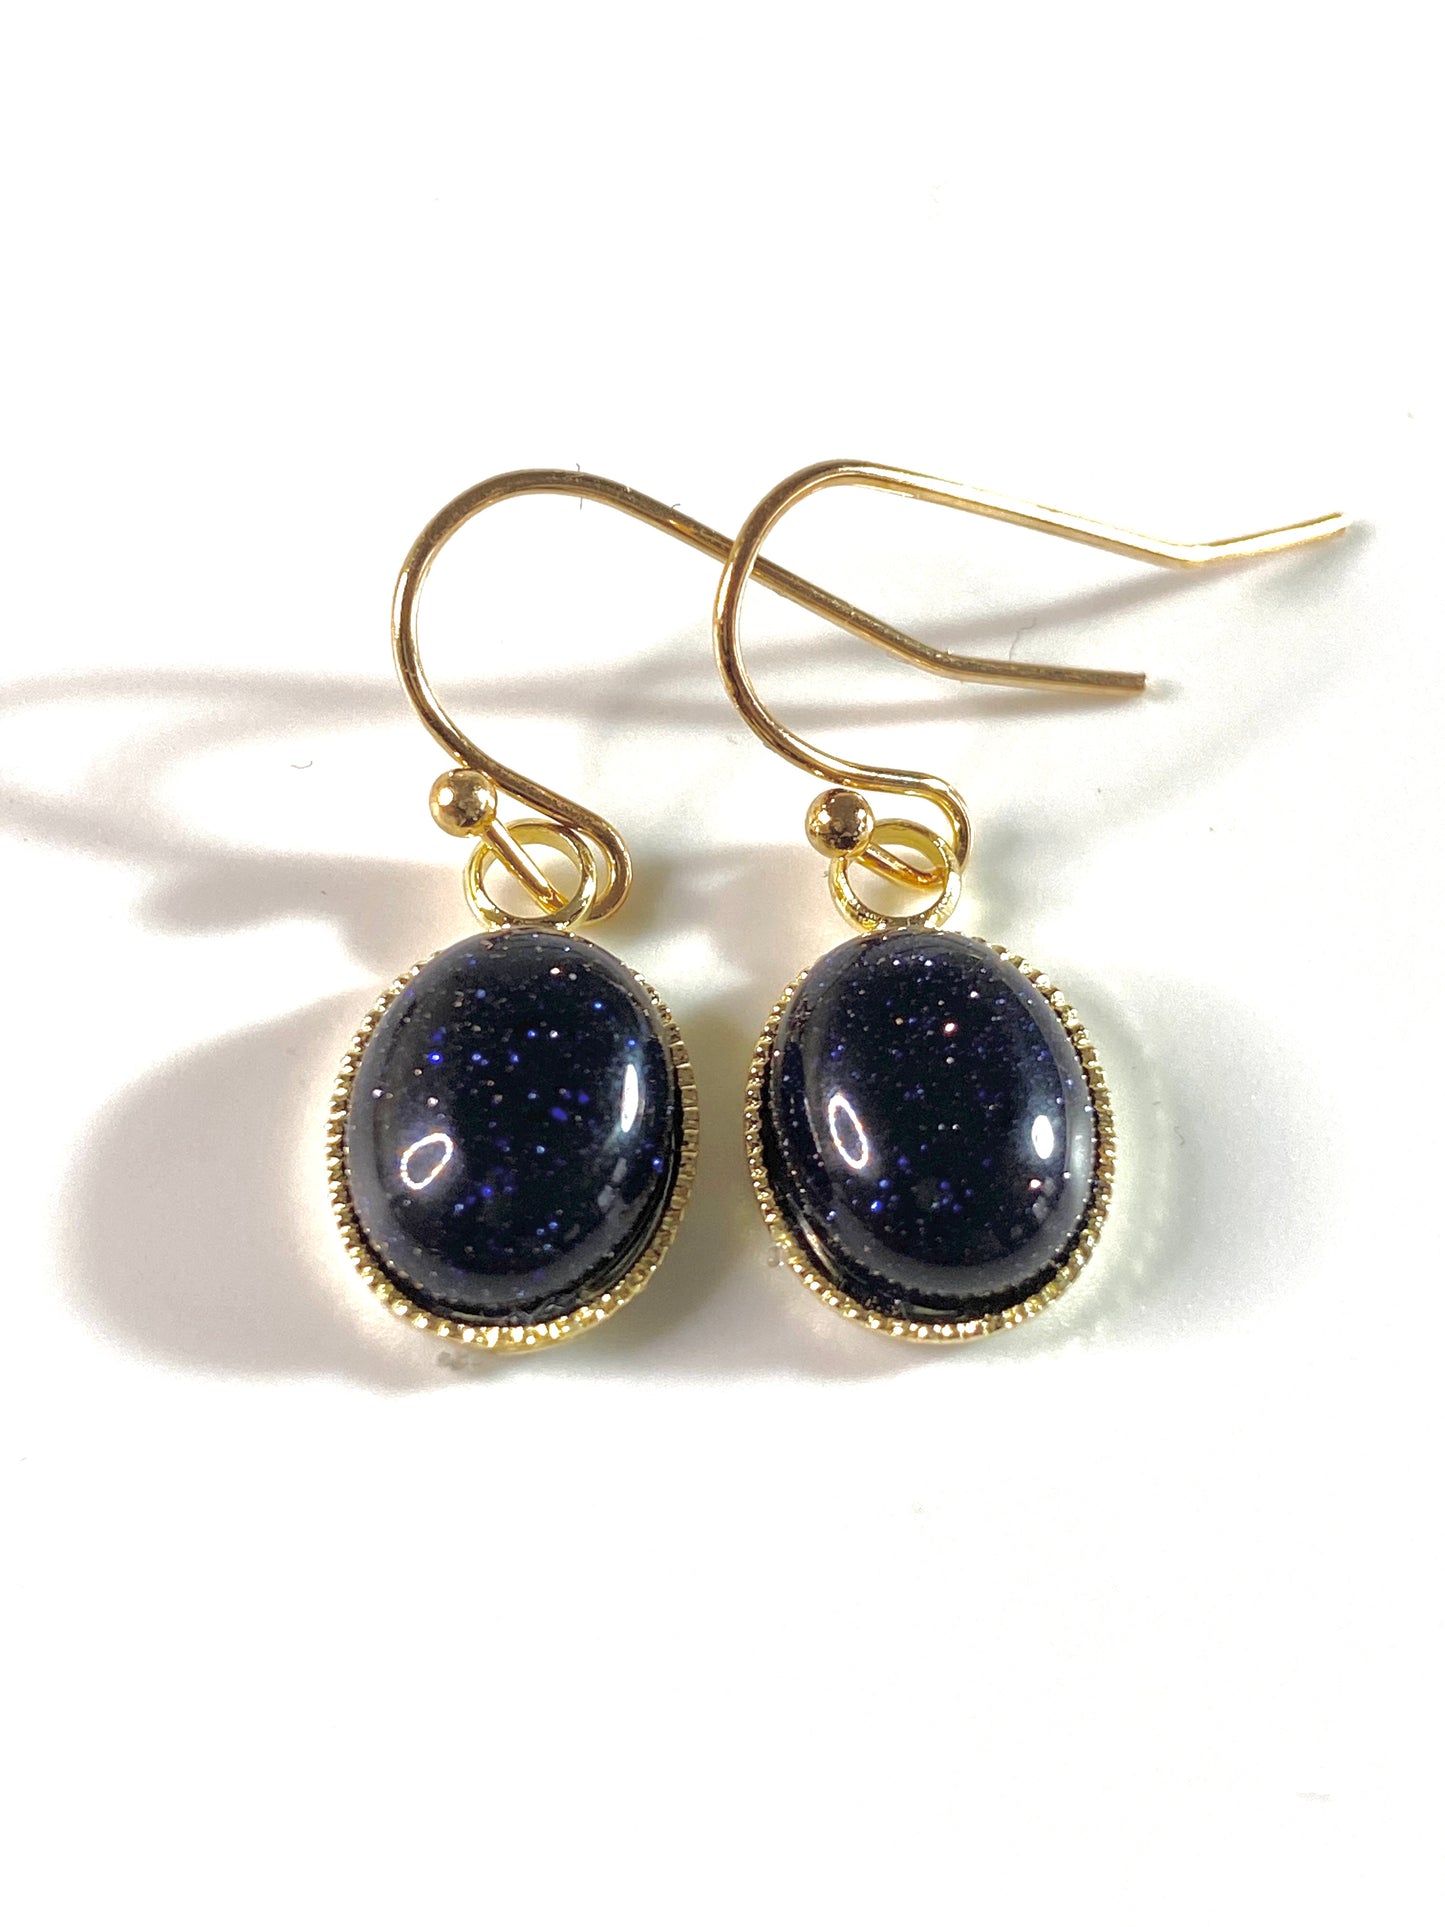 Oval Earrings with semi-precious gemstones